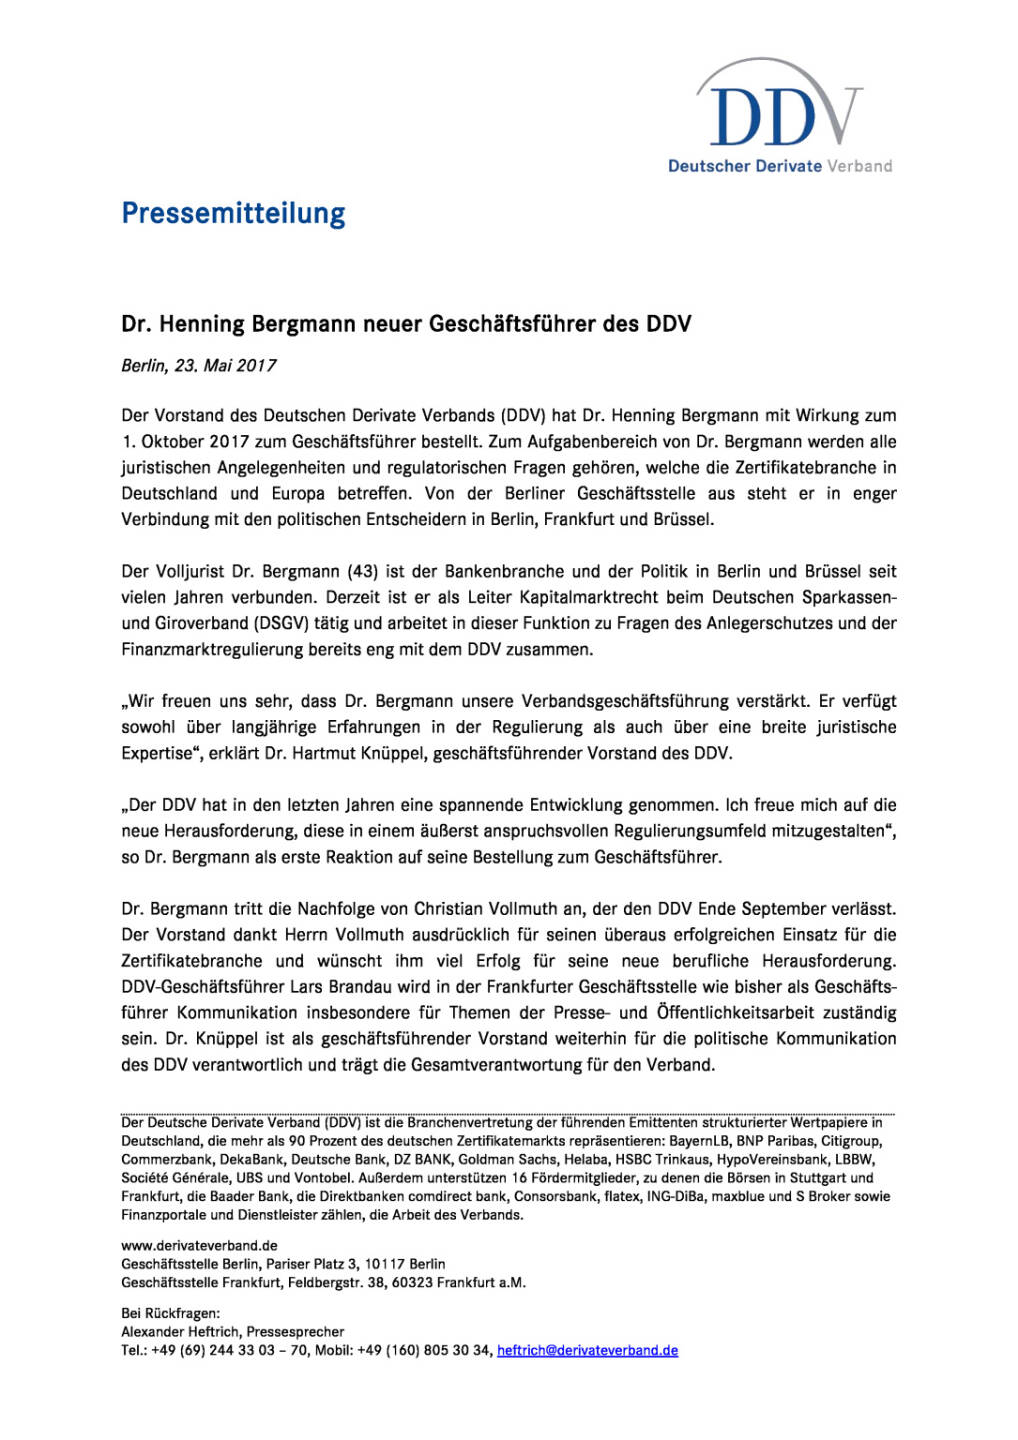 Henning Bergmann neuer Geschäftsführer des DDV, Seite 1/1, komplettes Dokument unter http://boerse-social.com/static/uploads/file_2263_henning_bergmann_neuer_geschaftsfuhrer_des_ddv.pdf